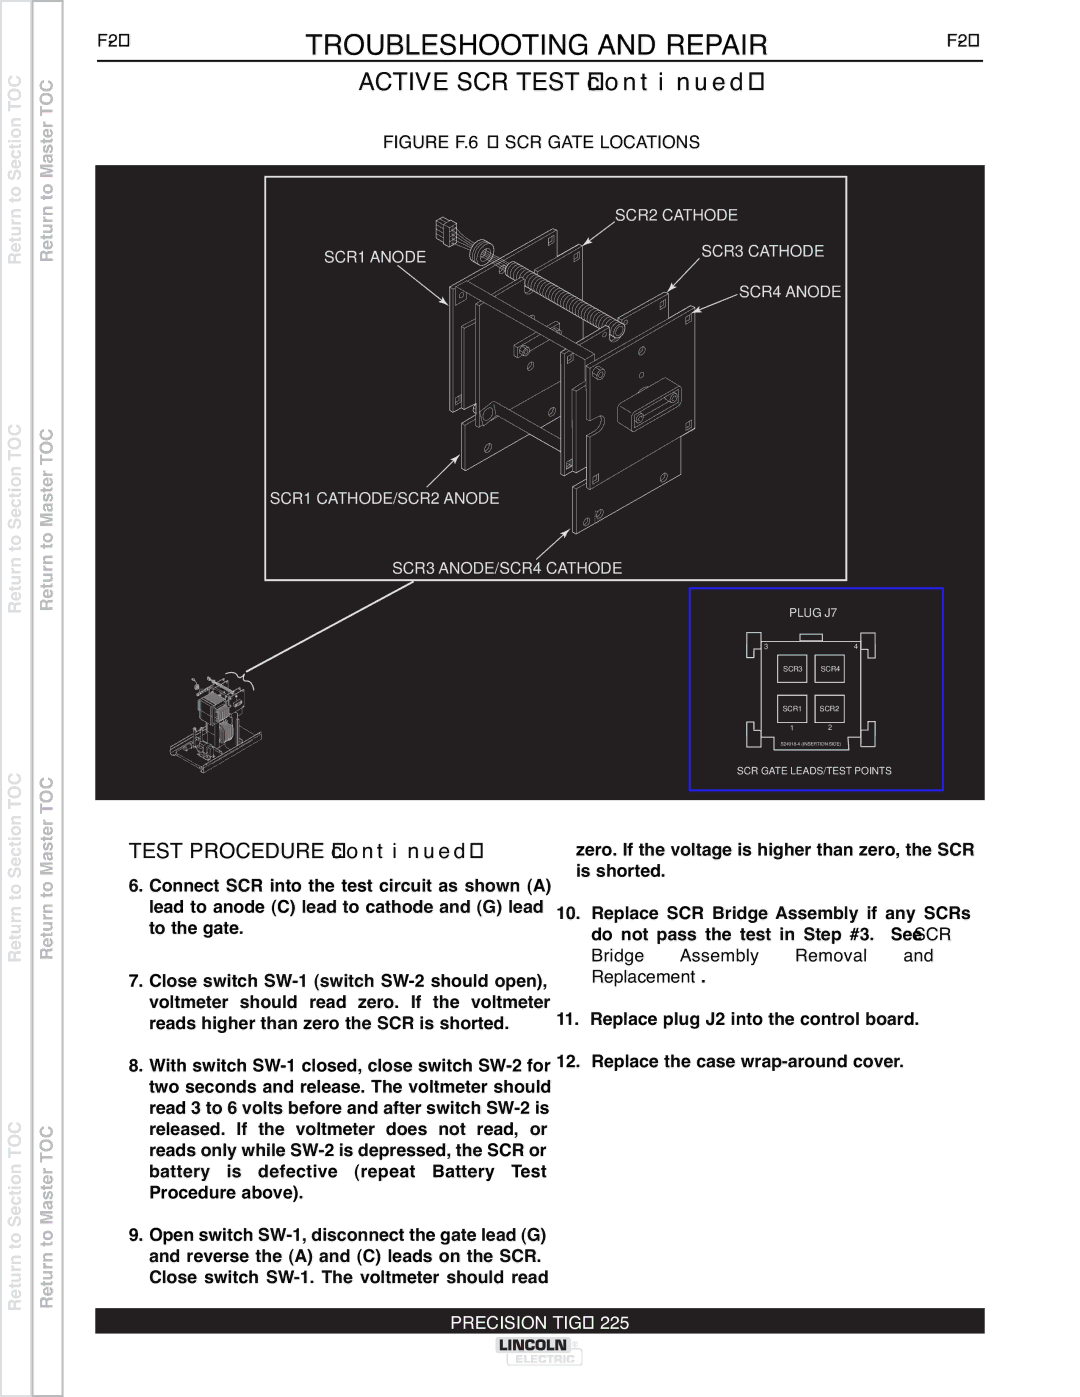 Lincoln Electric SVM186-A service manual Figure F.6 SCR Gate Locations 